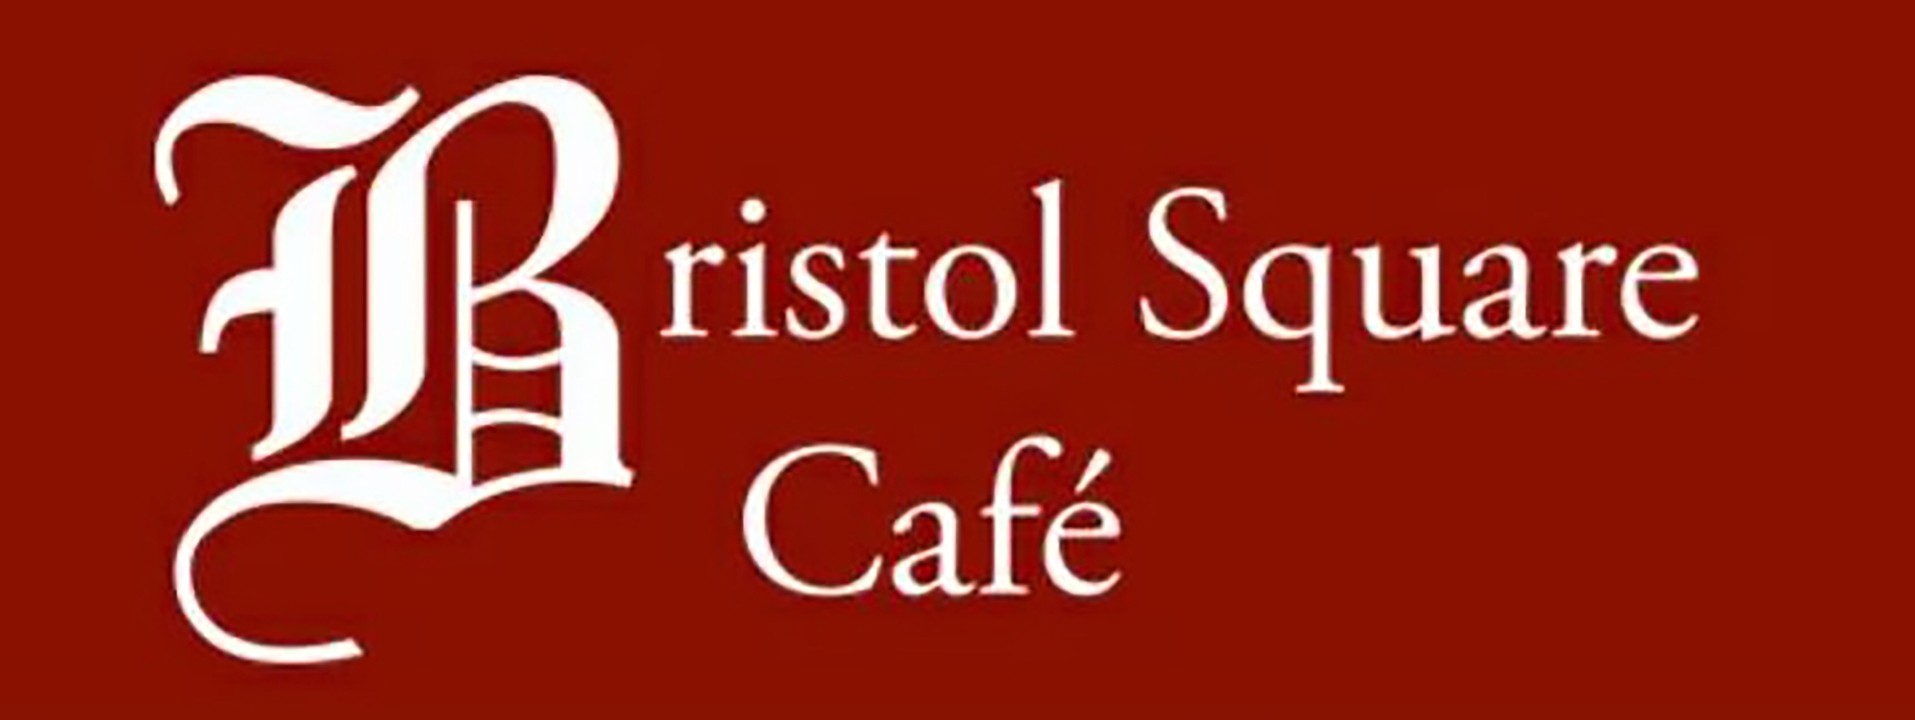 Bristol Square Cafe 1428 Main St